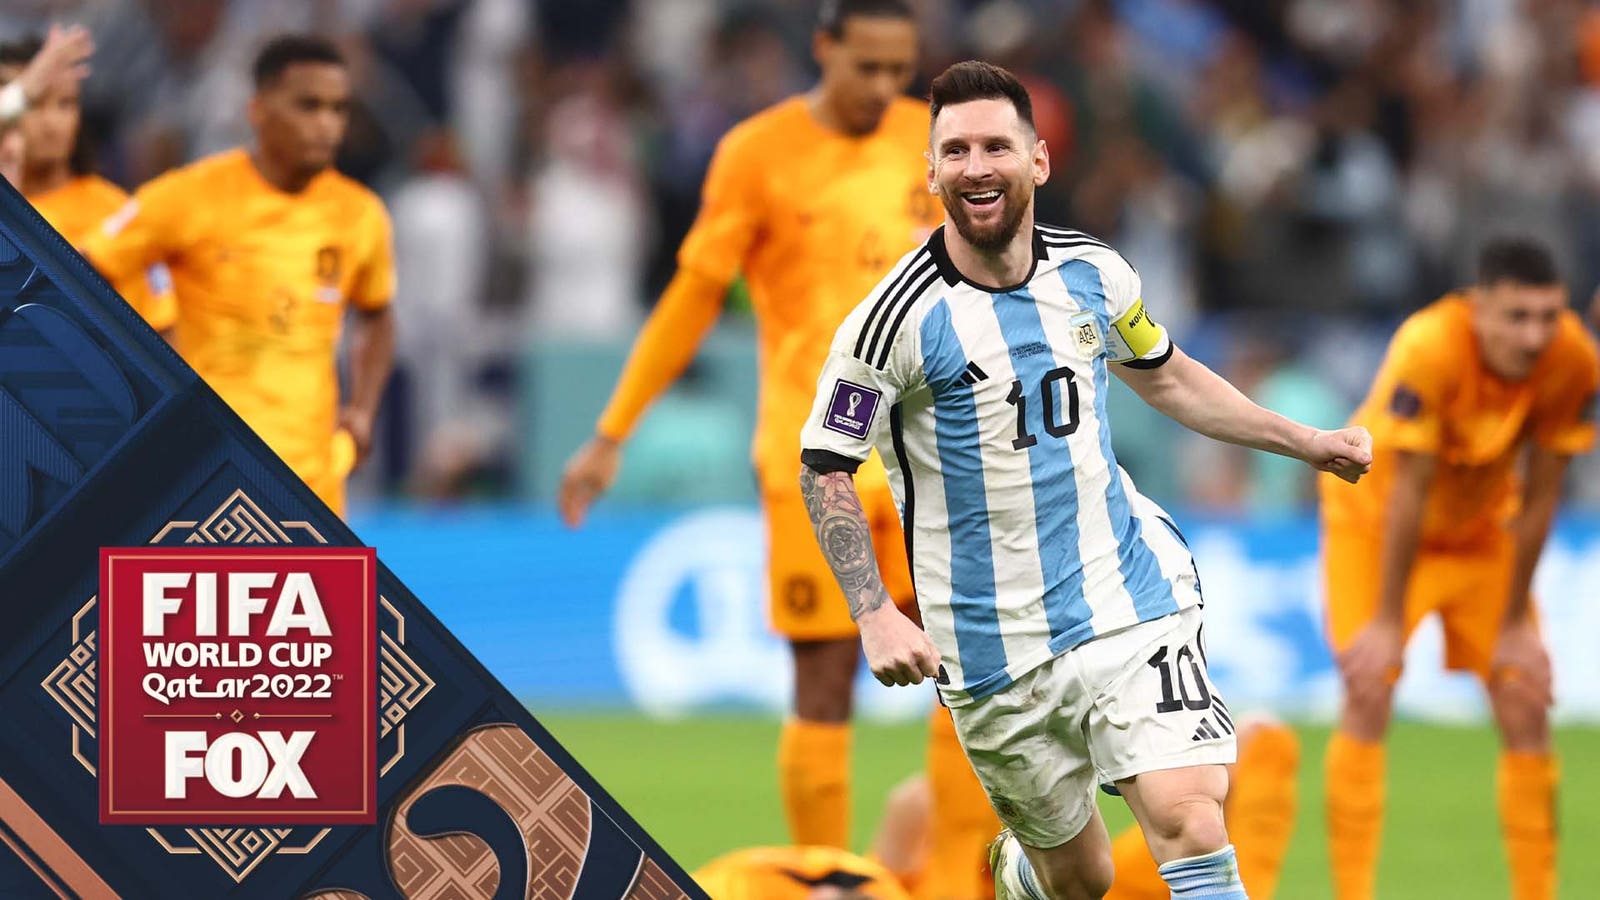 Holland vs Argentina recap: Analysis of Lionel Messi's masterclass performance